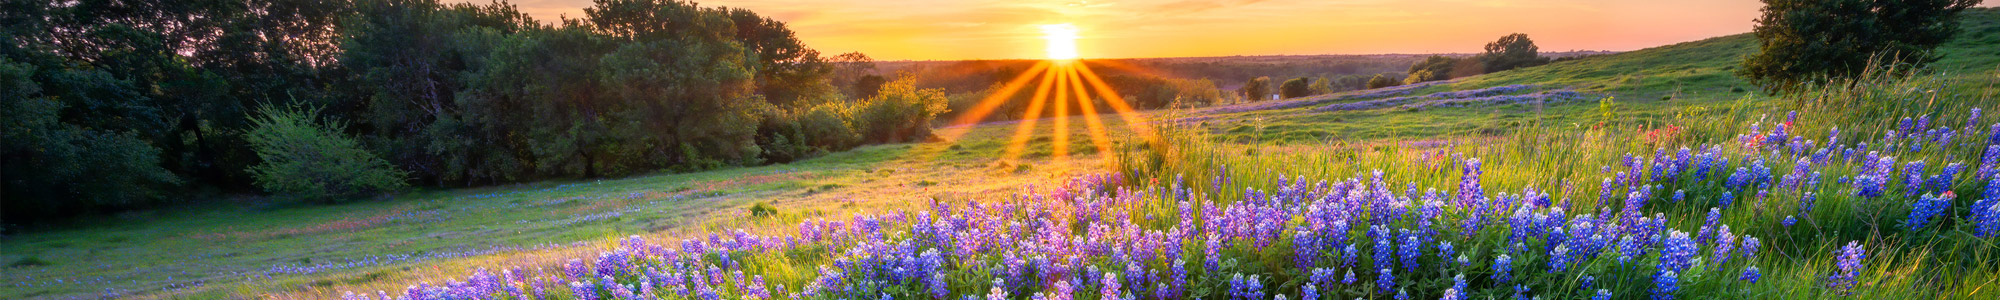 sun setting over bluebonnets in Texas